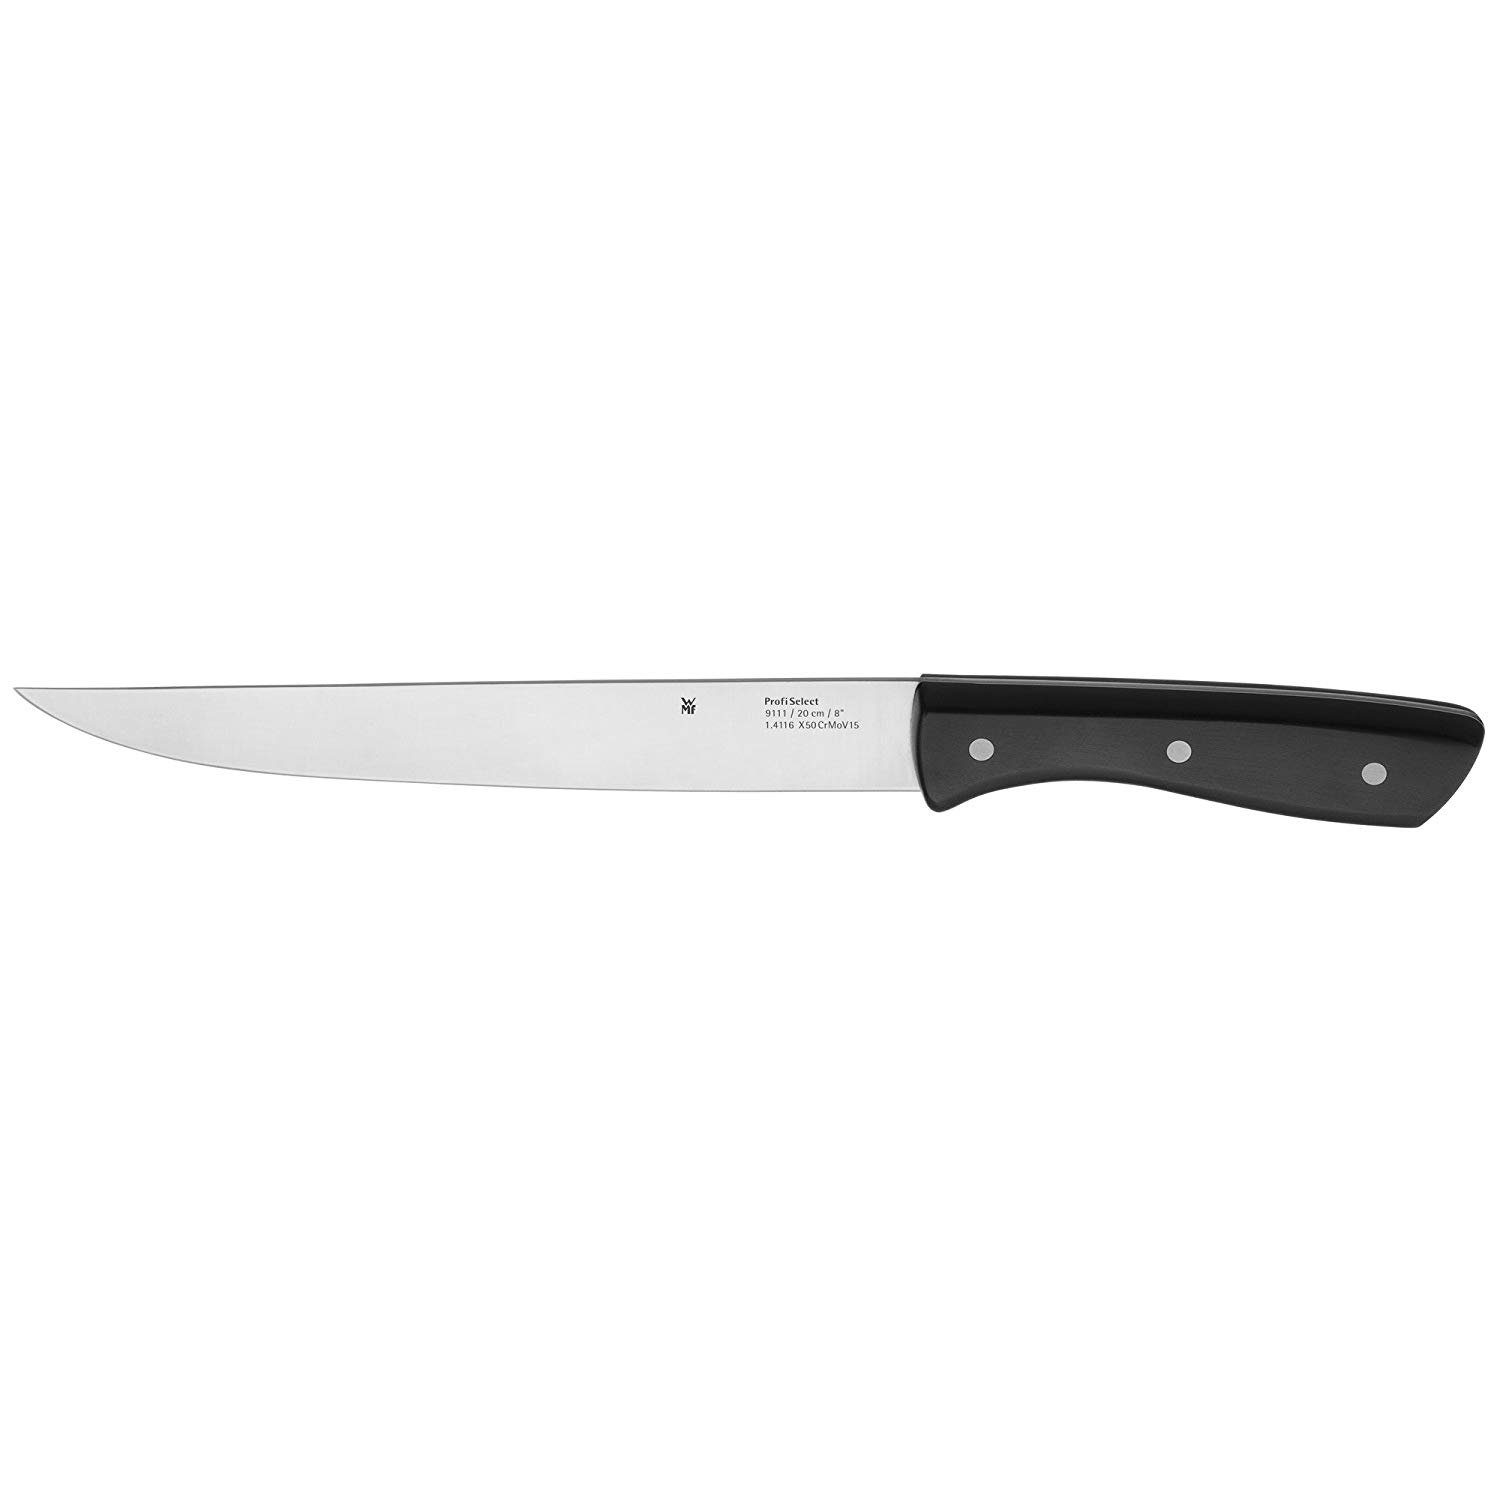 WMF Messerblock ProfiSelect (7tlg), geschmiedet, 6 1 Eichenholz aus Spezialklingenstahl Block Messer